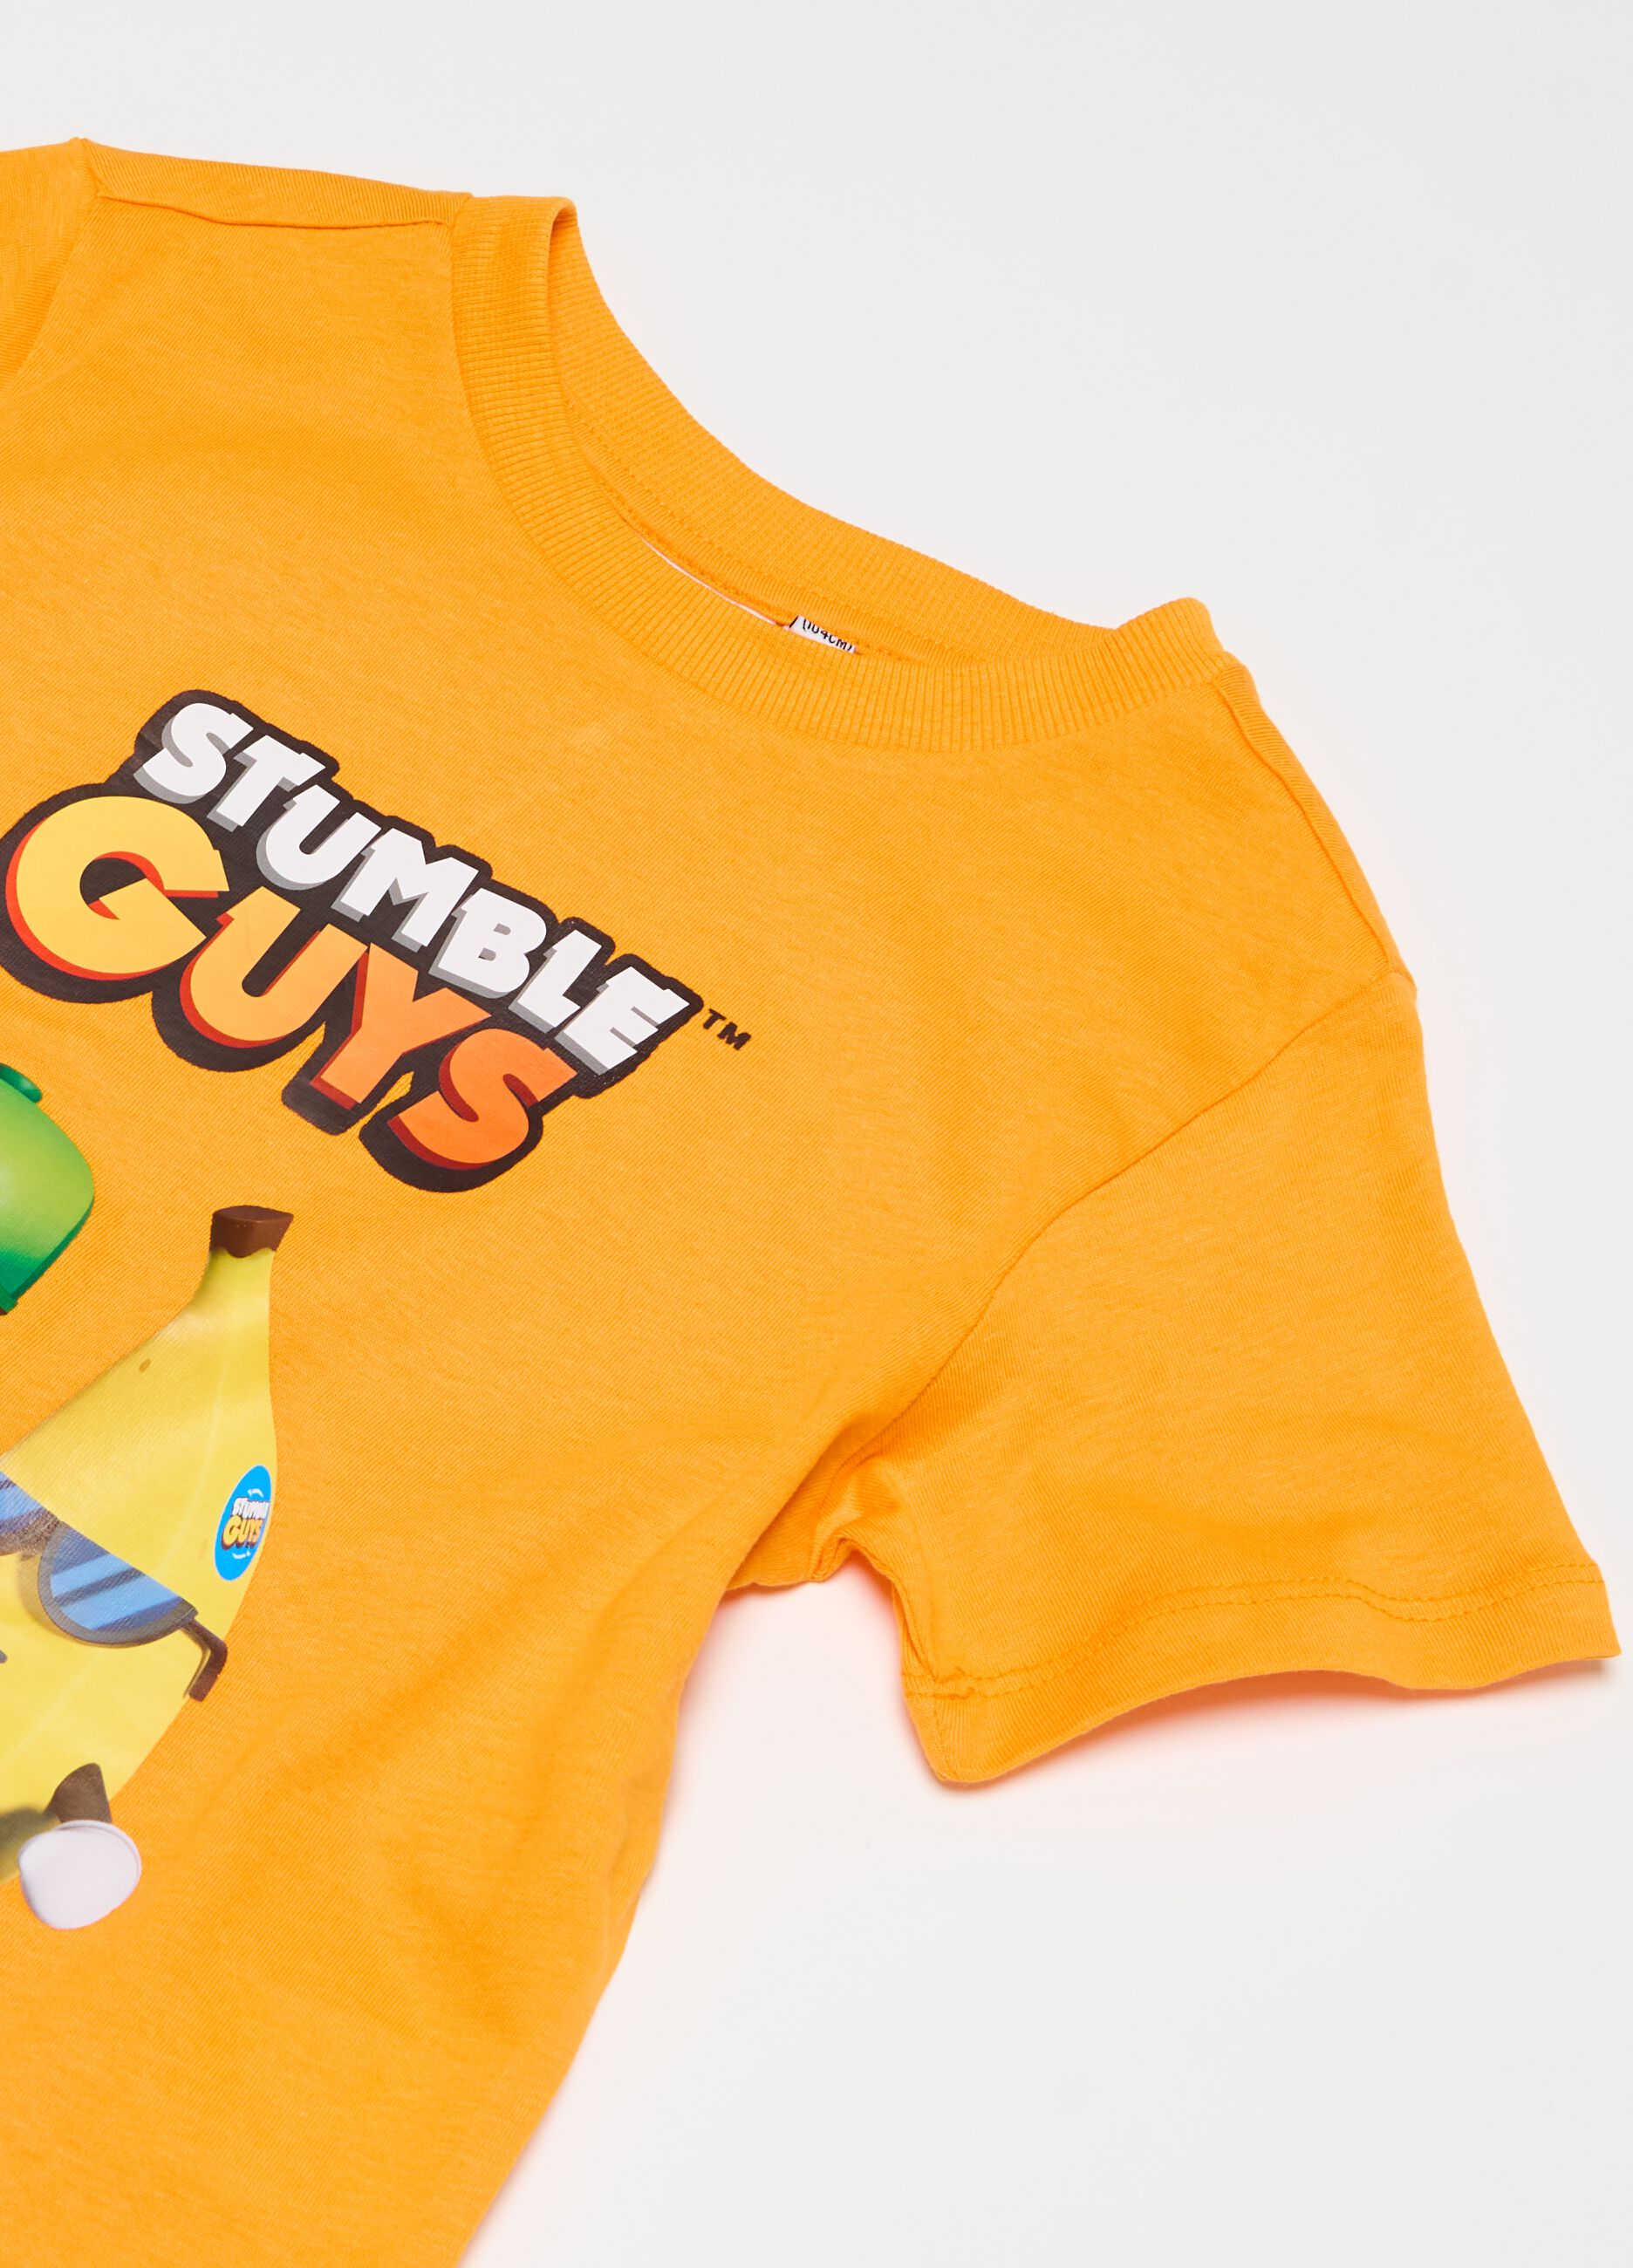 T-shirt with Mr. Stumble and Banana Guy print